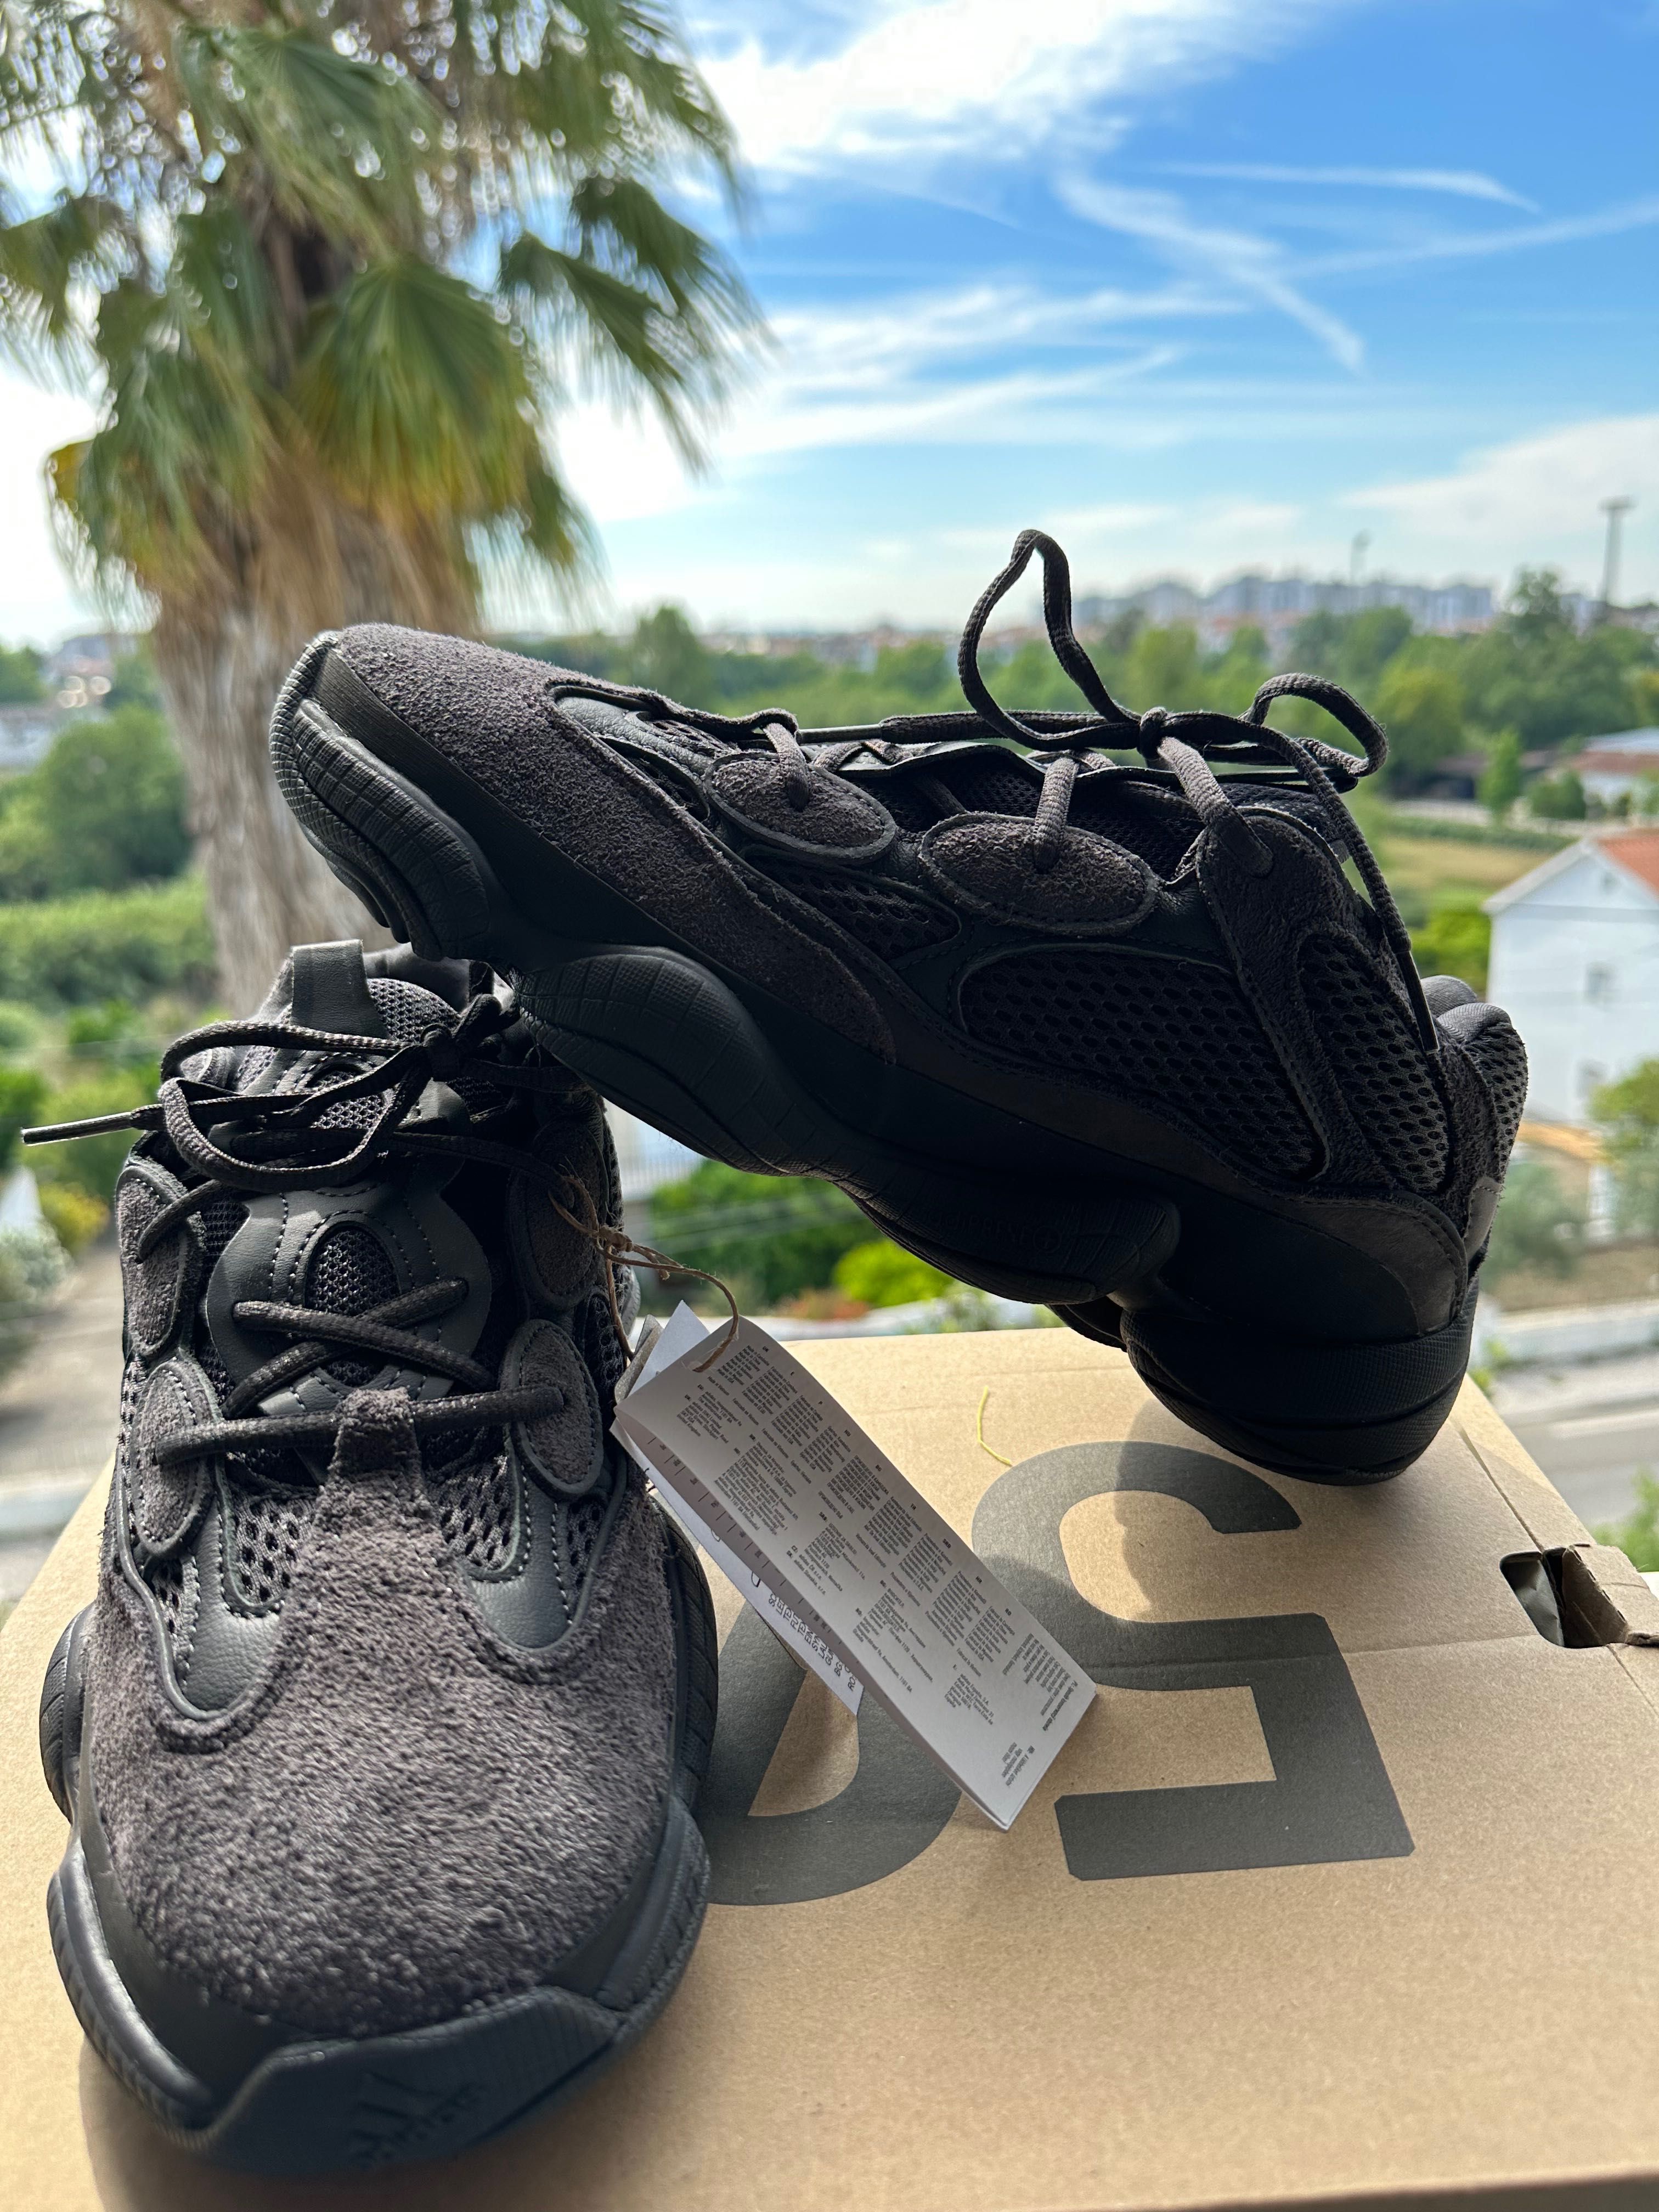 Adidas Yeezy 500 Utility Black 42 2/3 (Nike, Jordan, dunk low)